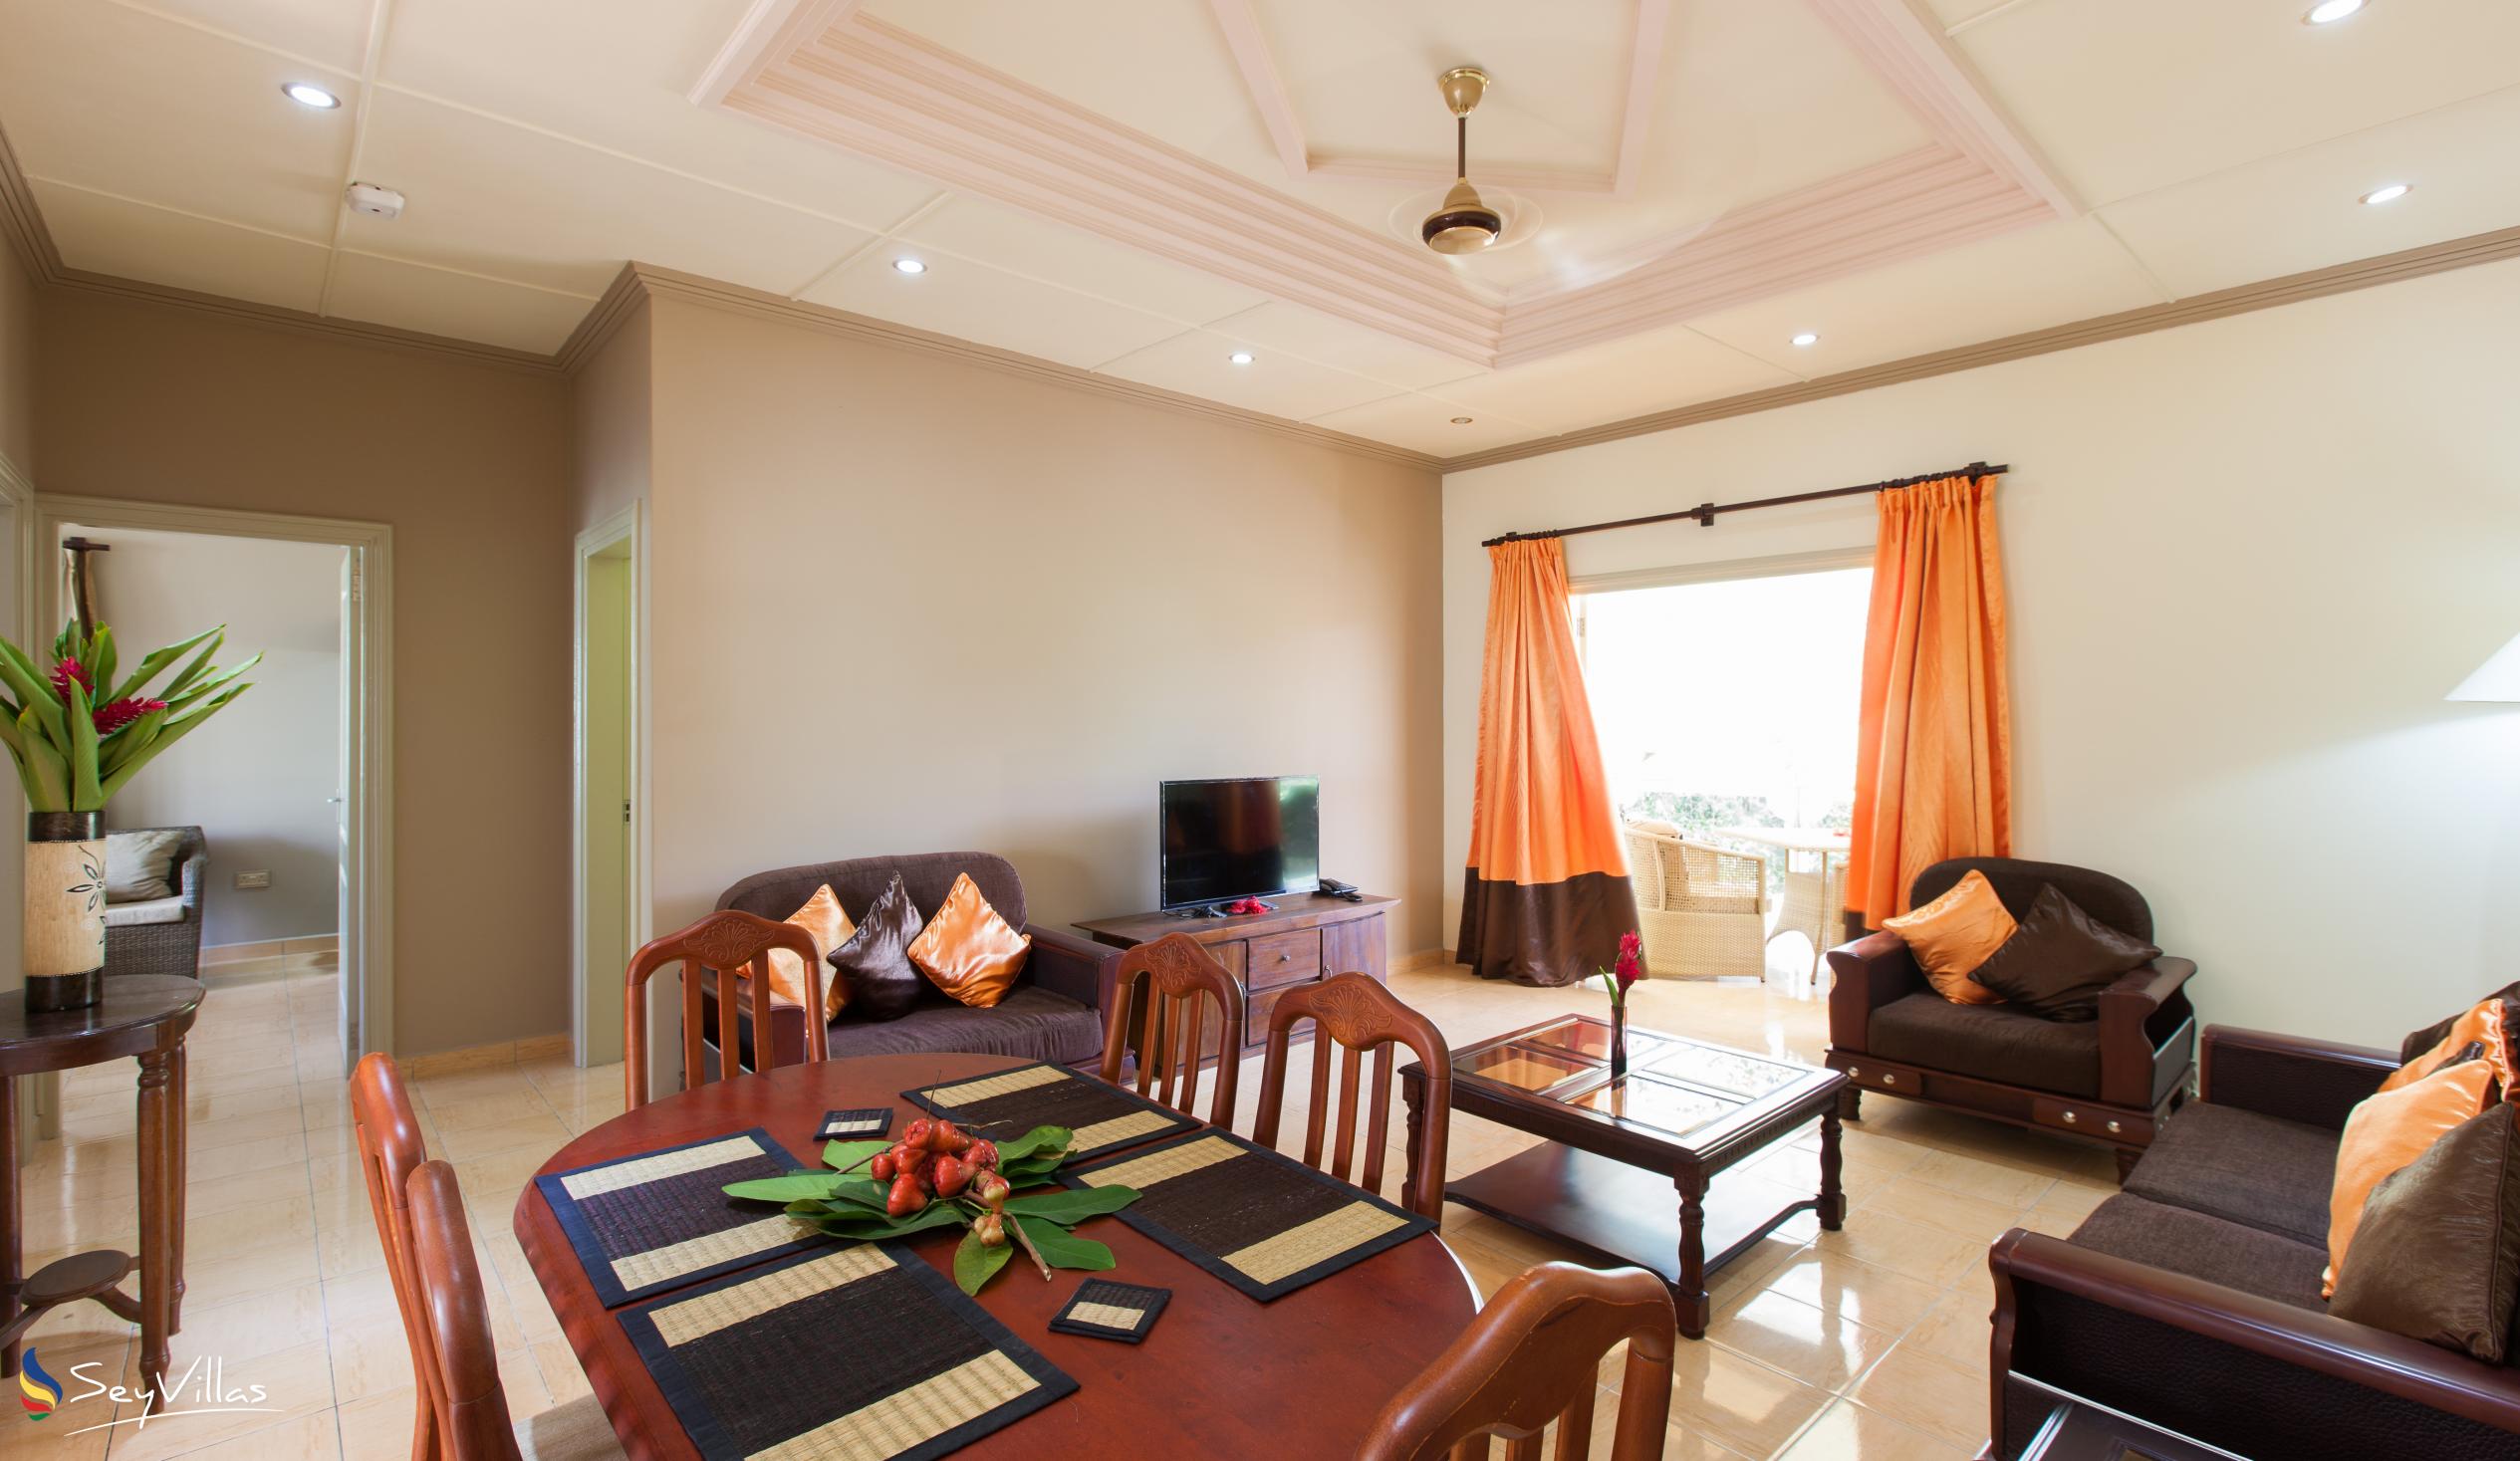 Foto 35: Chez Bea Villa - Appartement 2 chambres - Praslin (Seychelles)